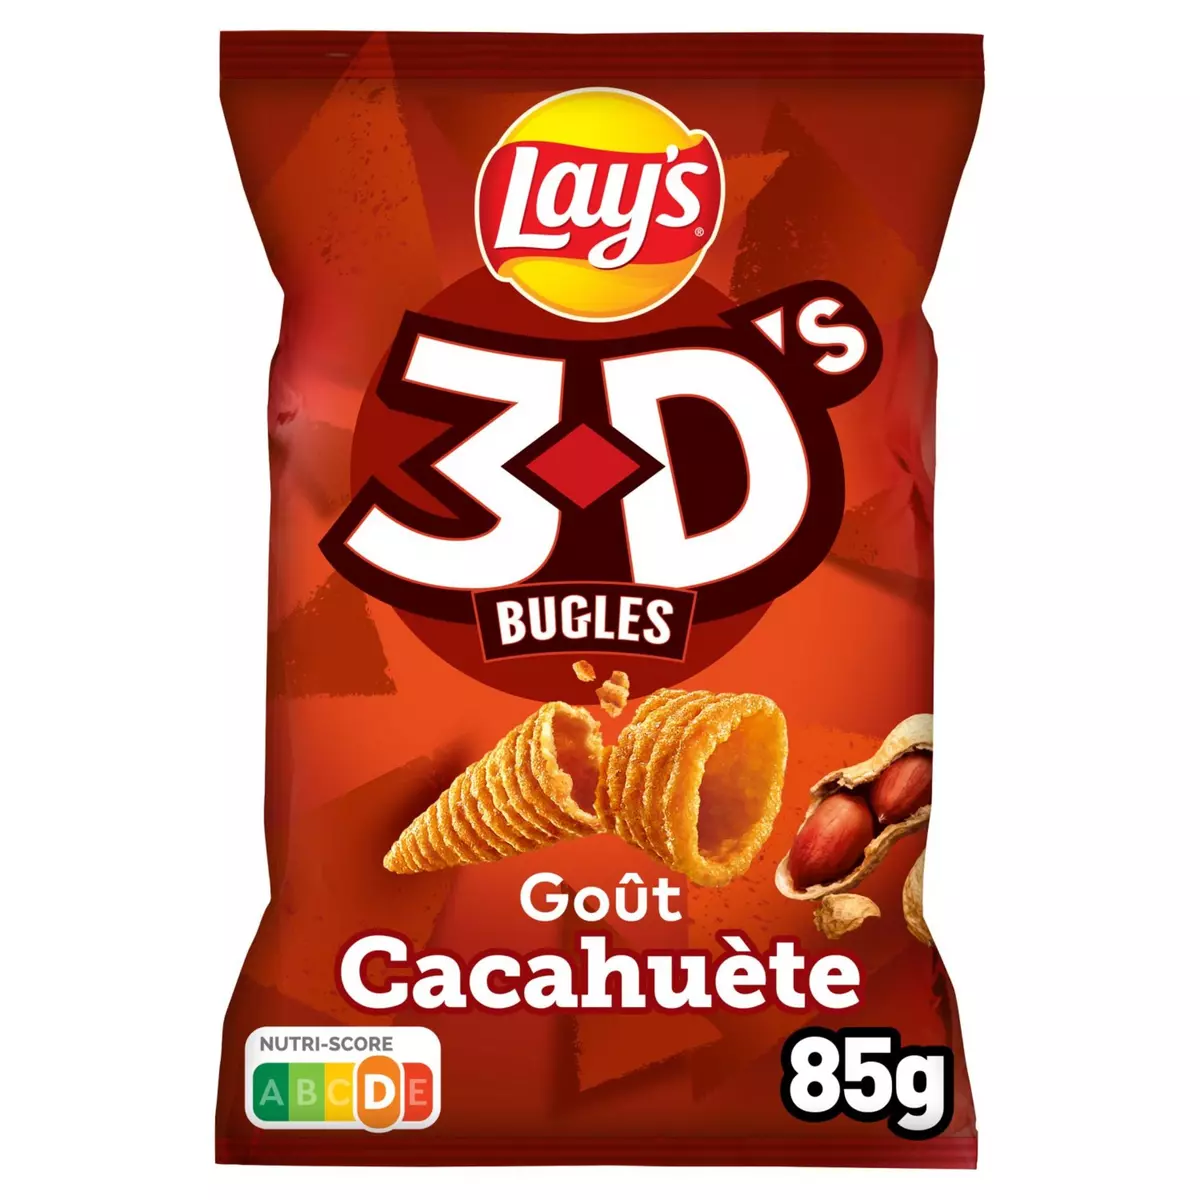 LAY'S Biscuits soufflés 3D's goût cacahuète 85g